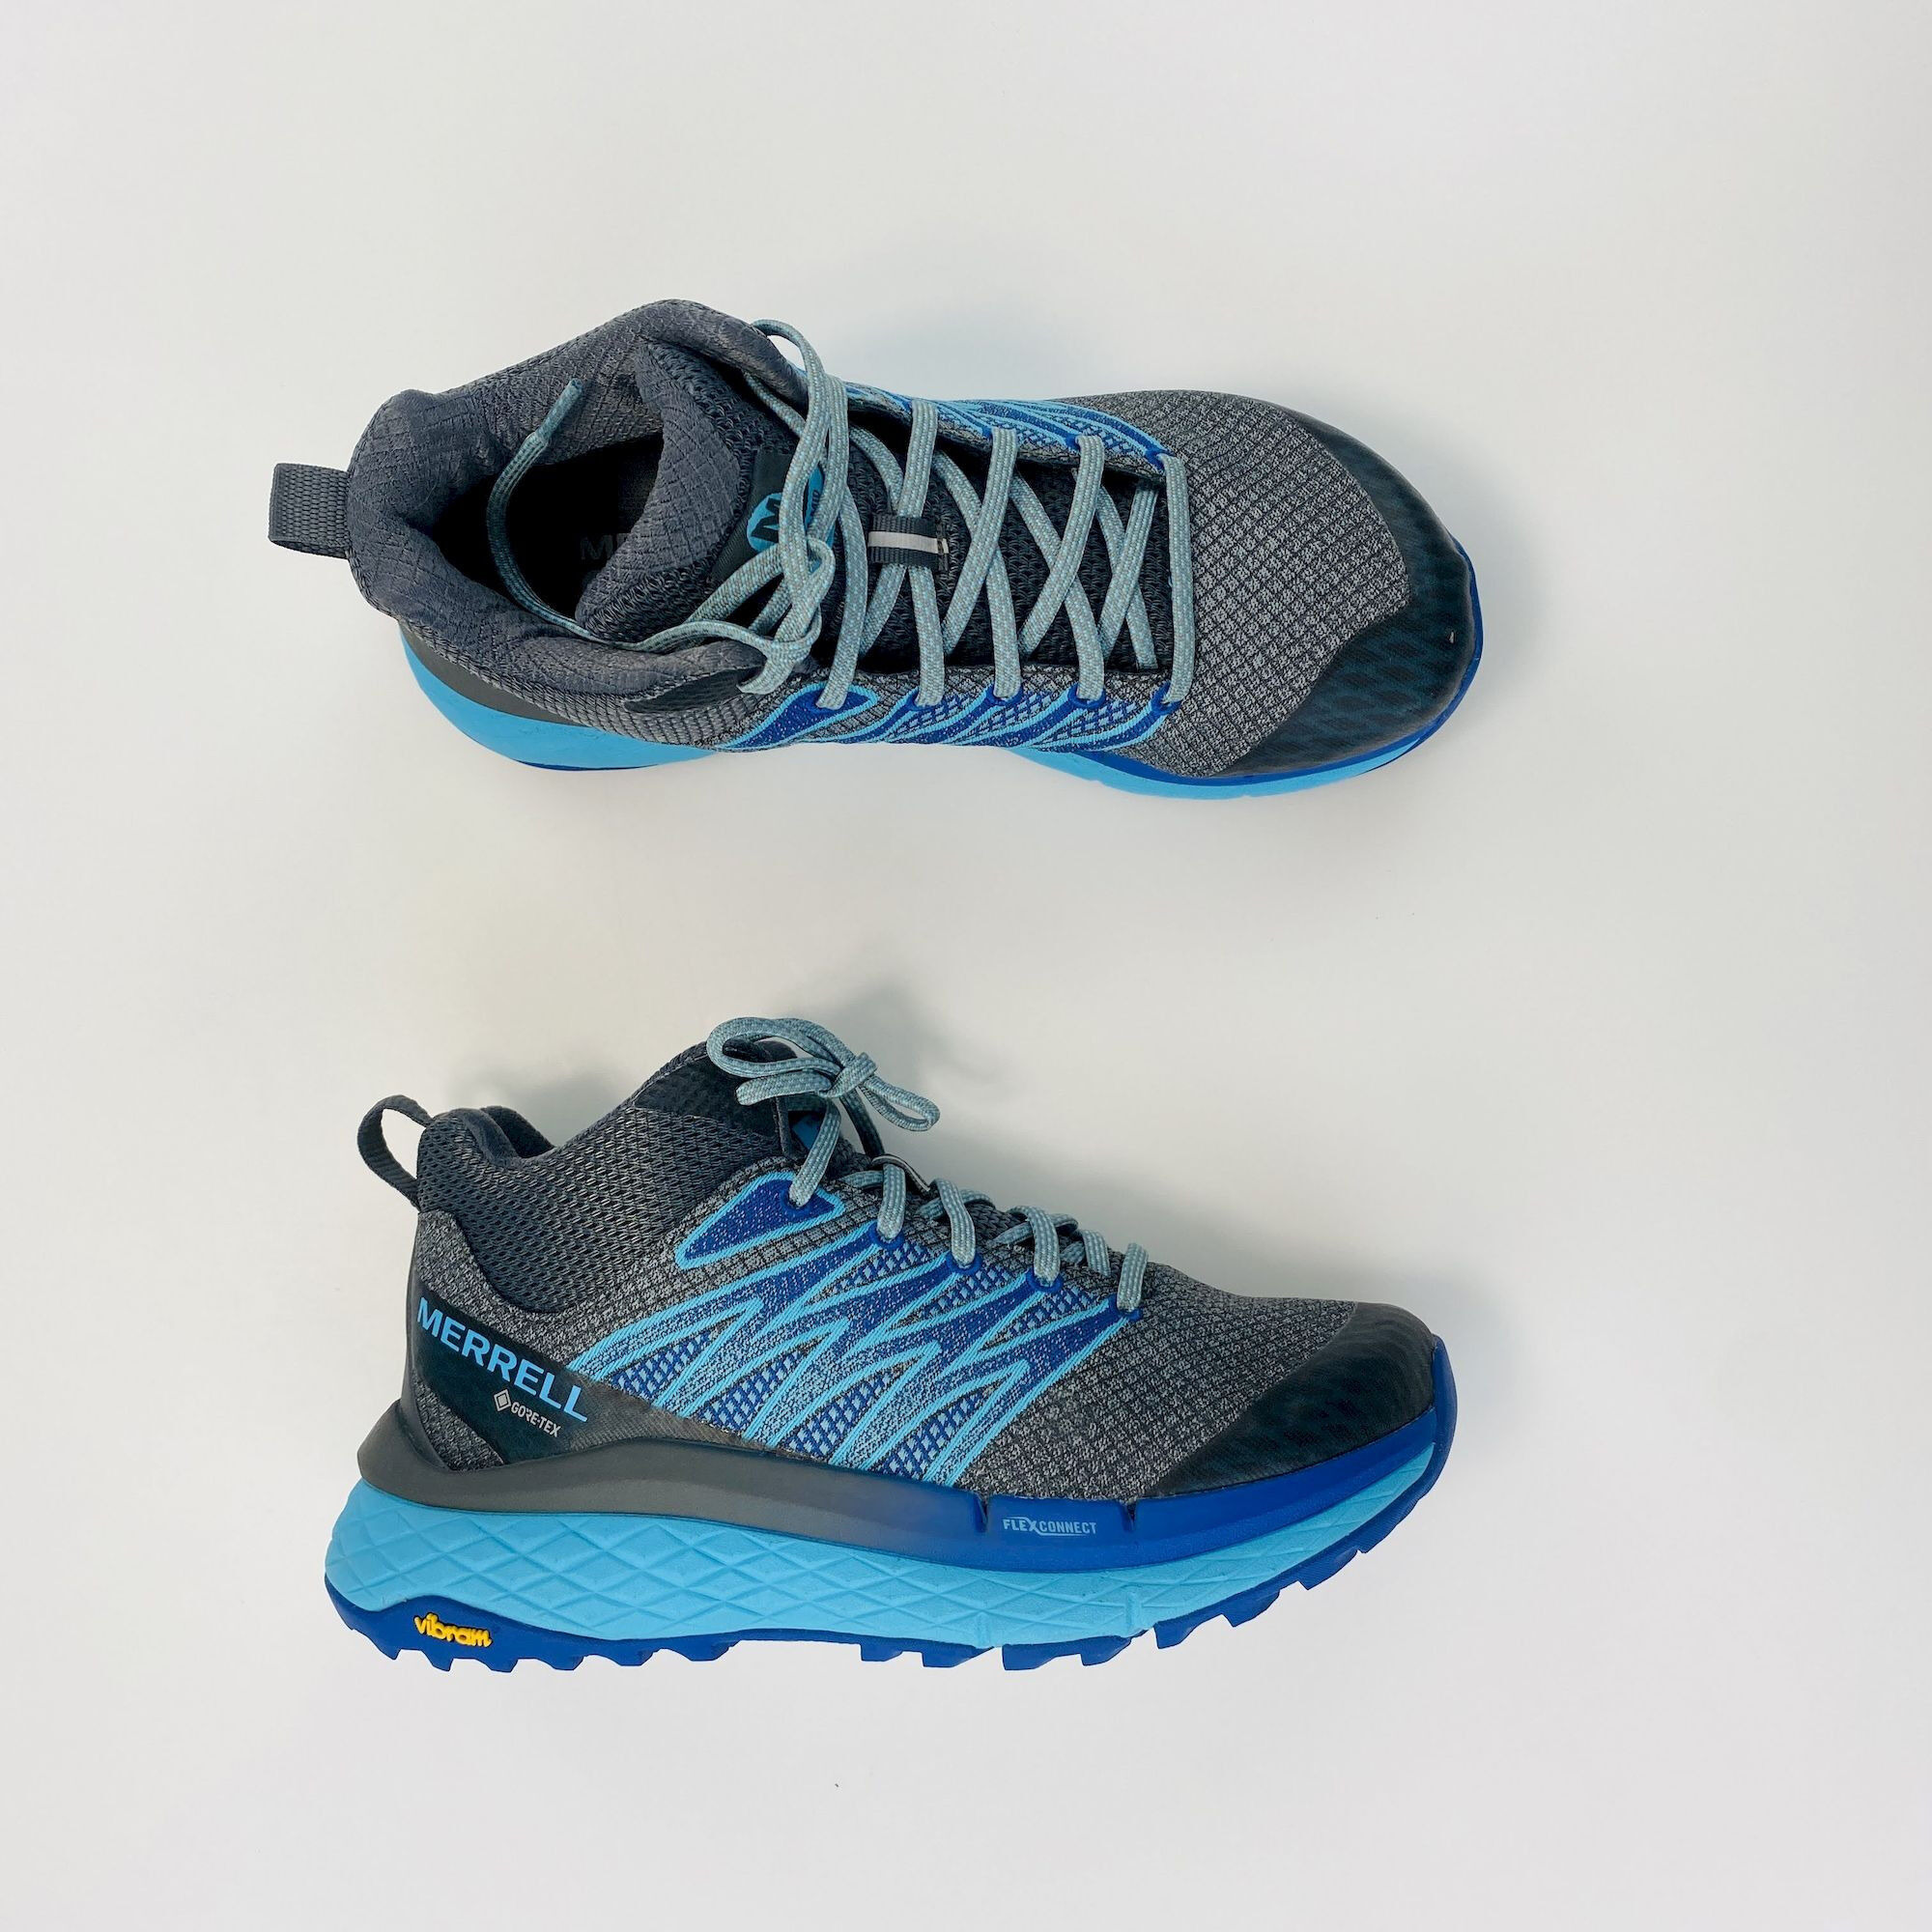 Merrell Chaussures randonnée Mid - Seconde main Chaussures randonnée femme - Gris/Bleu - 37.5 | Hardloop